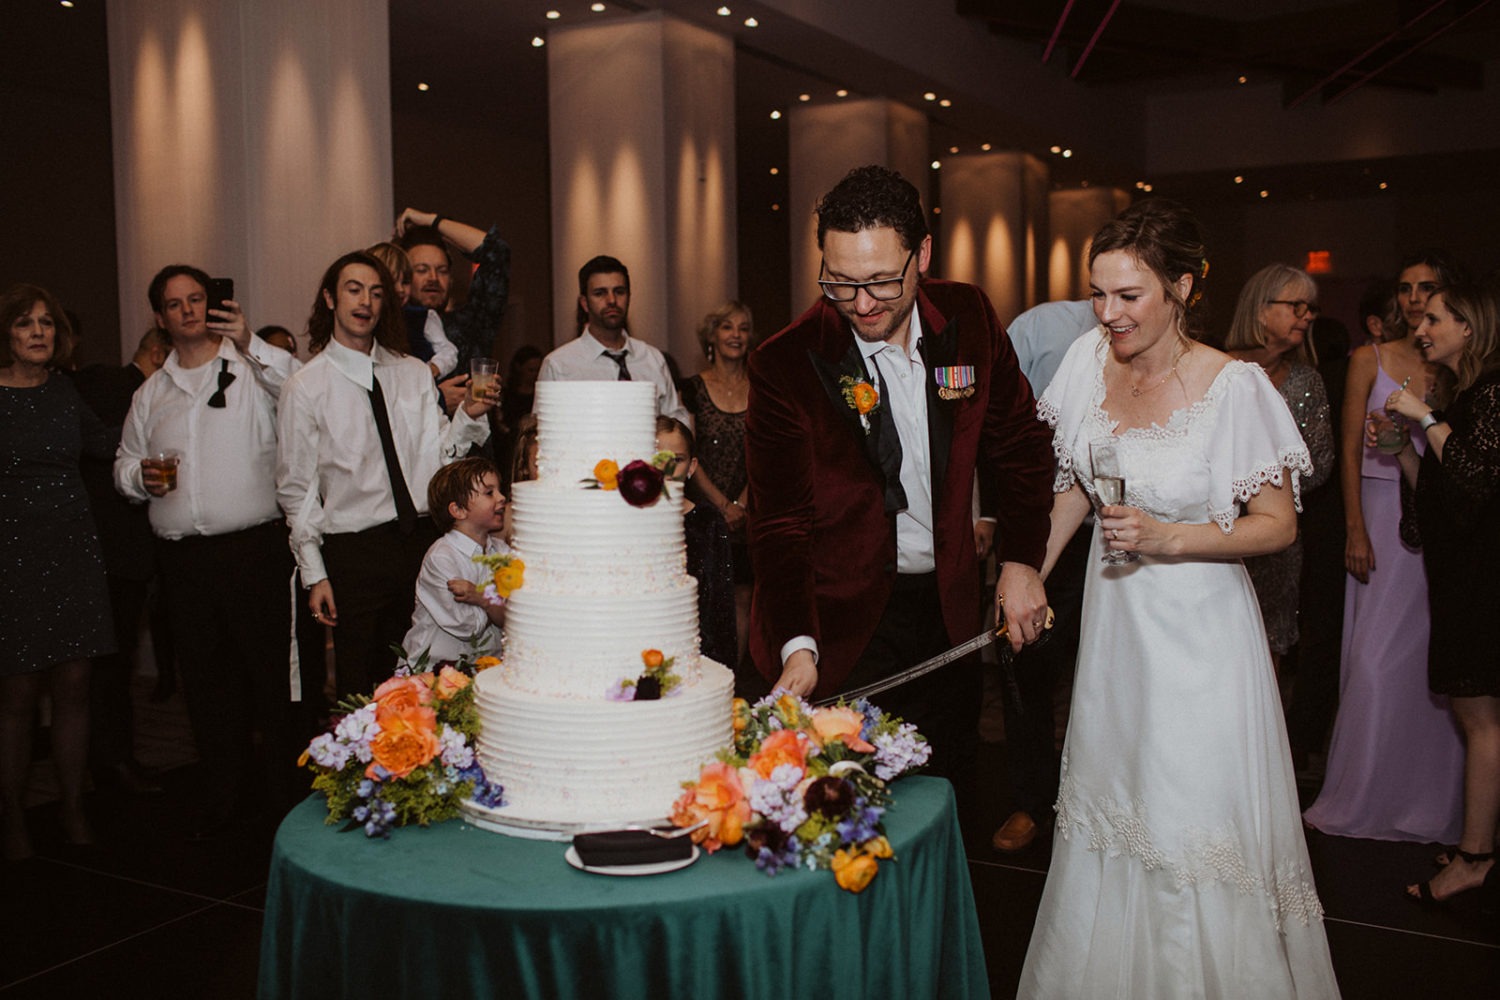 Couple cuts wedding cake with Marine sword arch